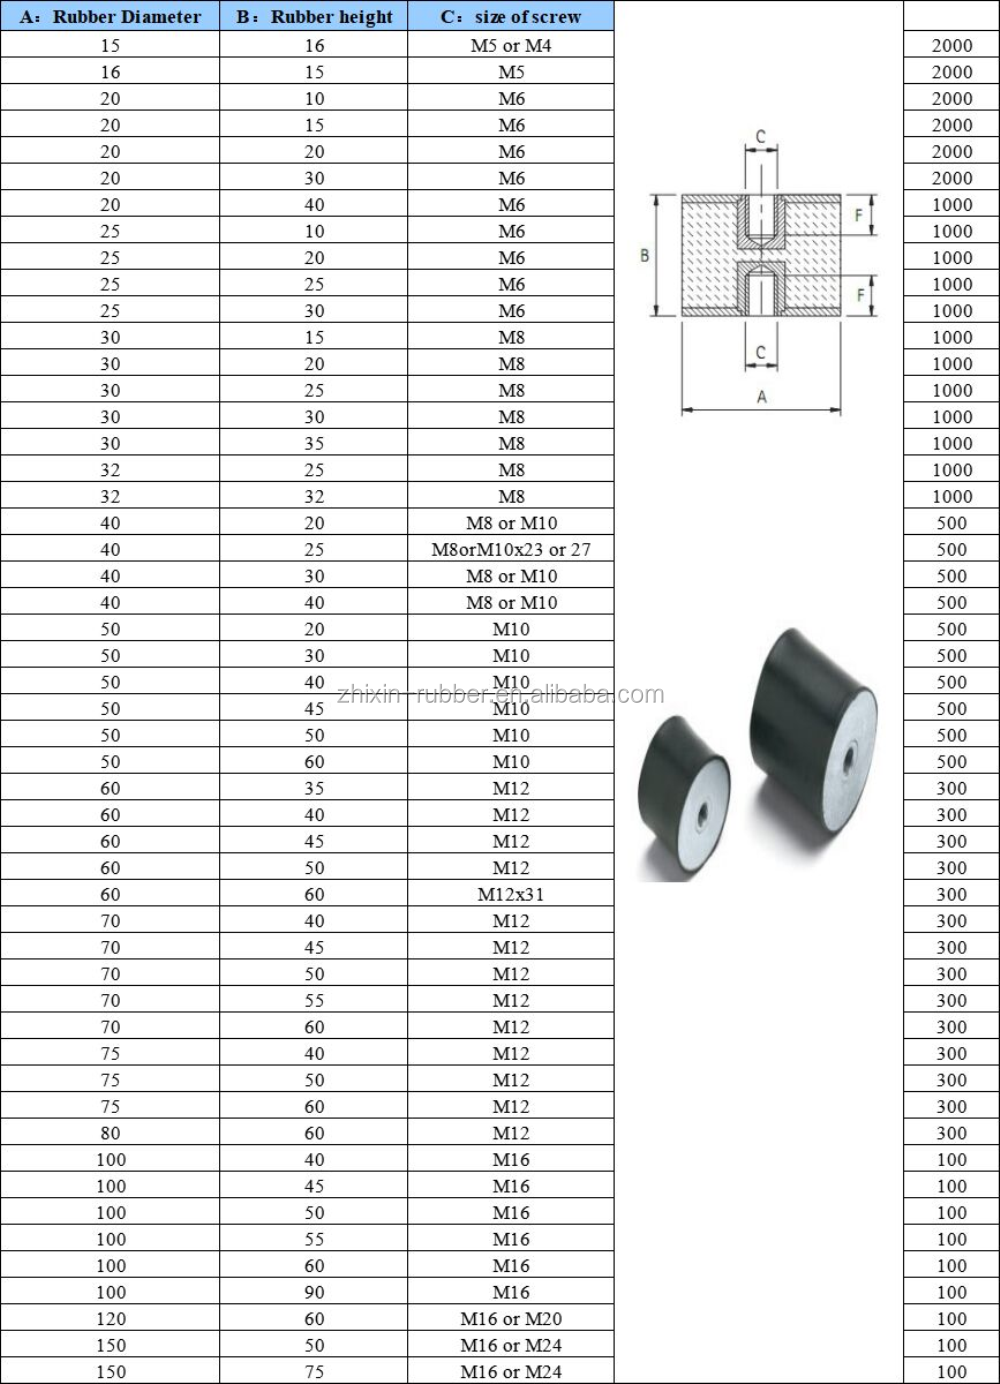 Low MOQ various sizes rubber damper anti vibration mount